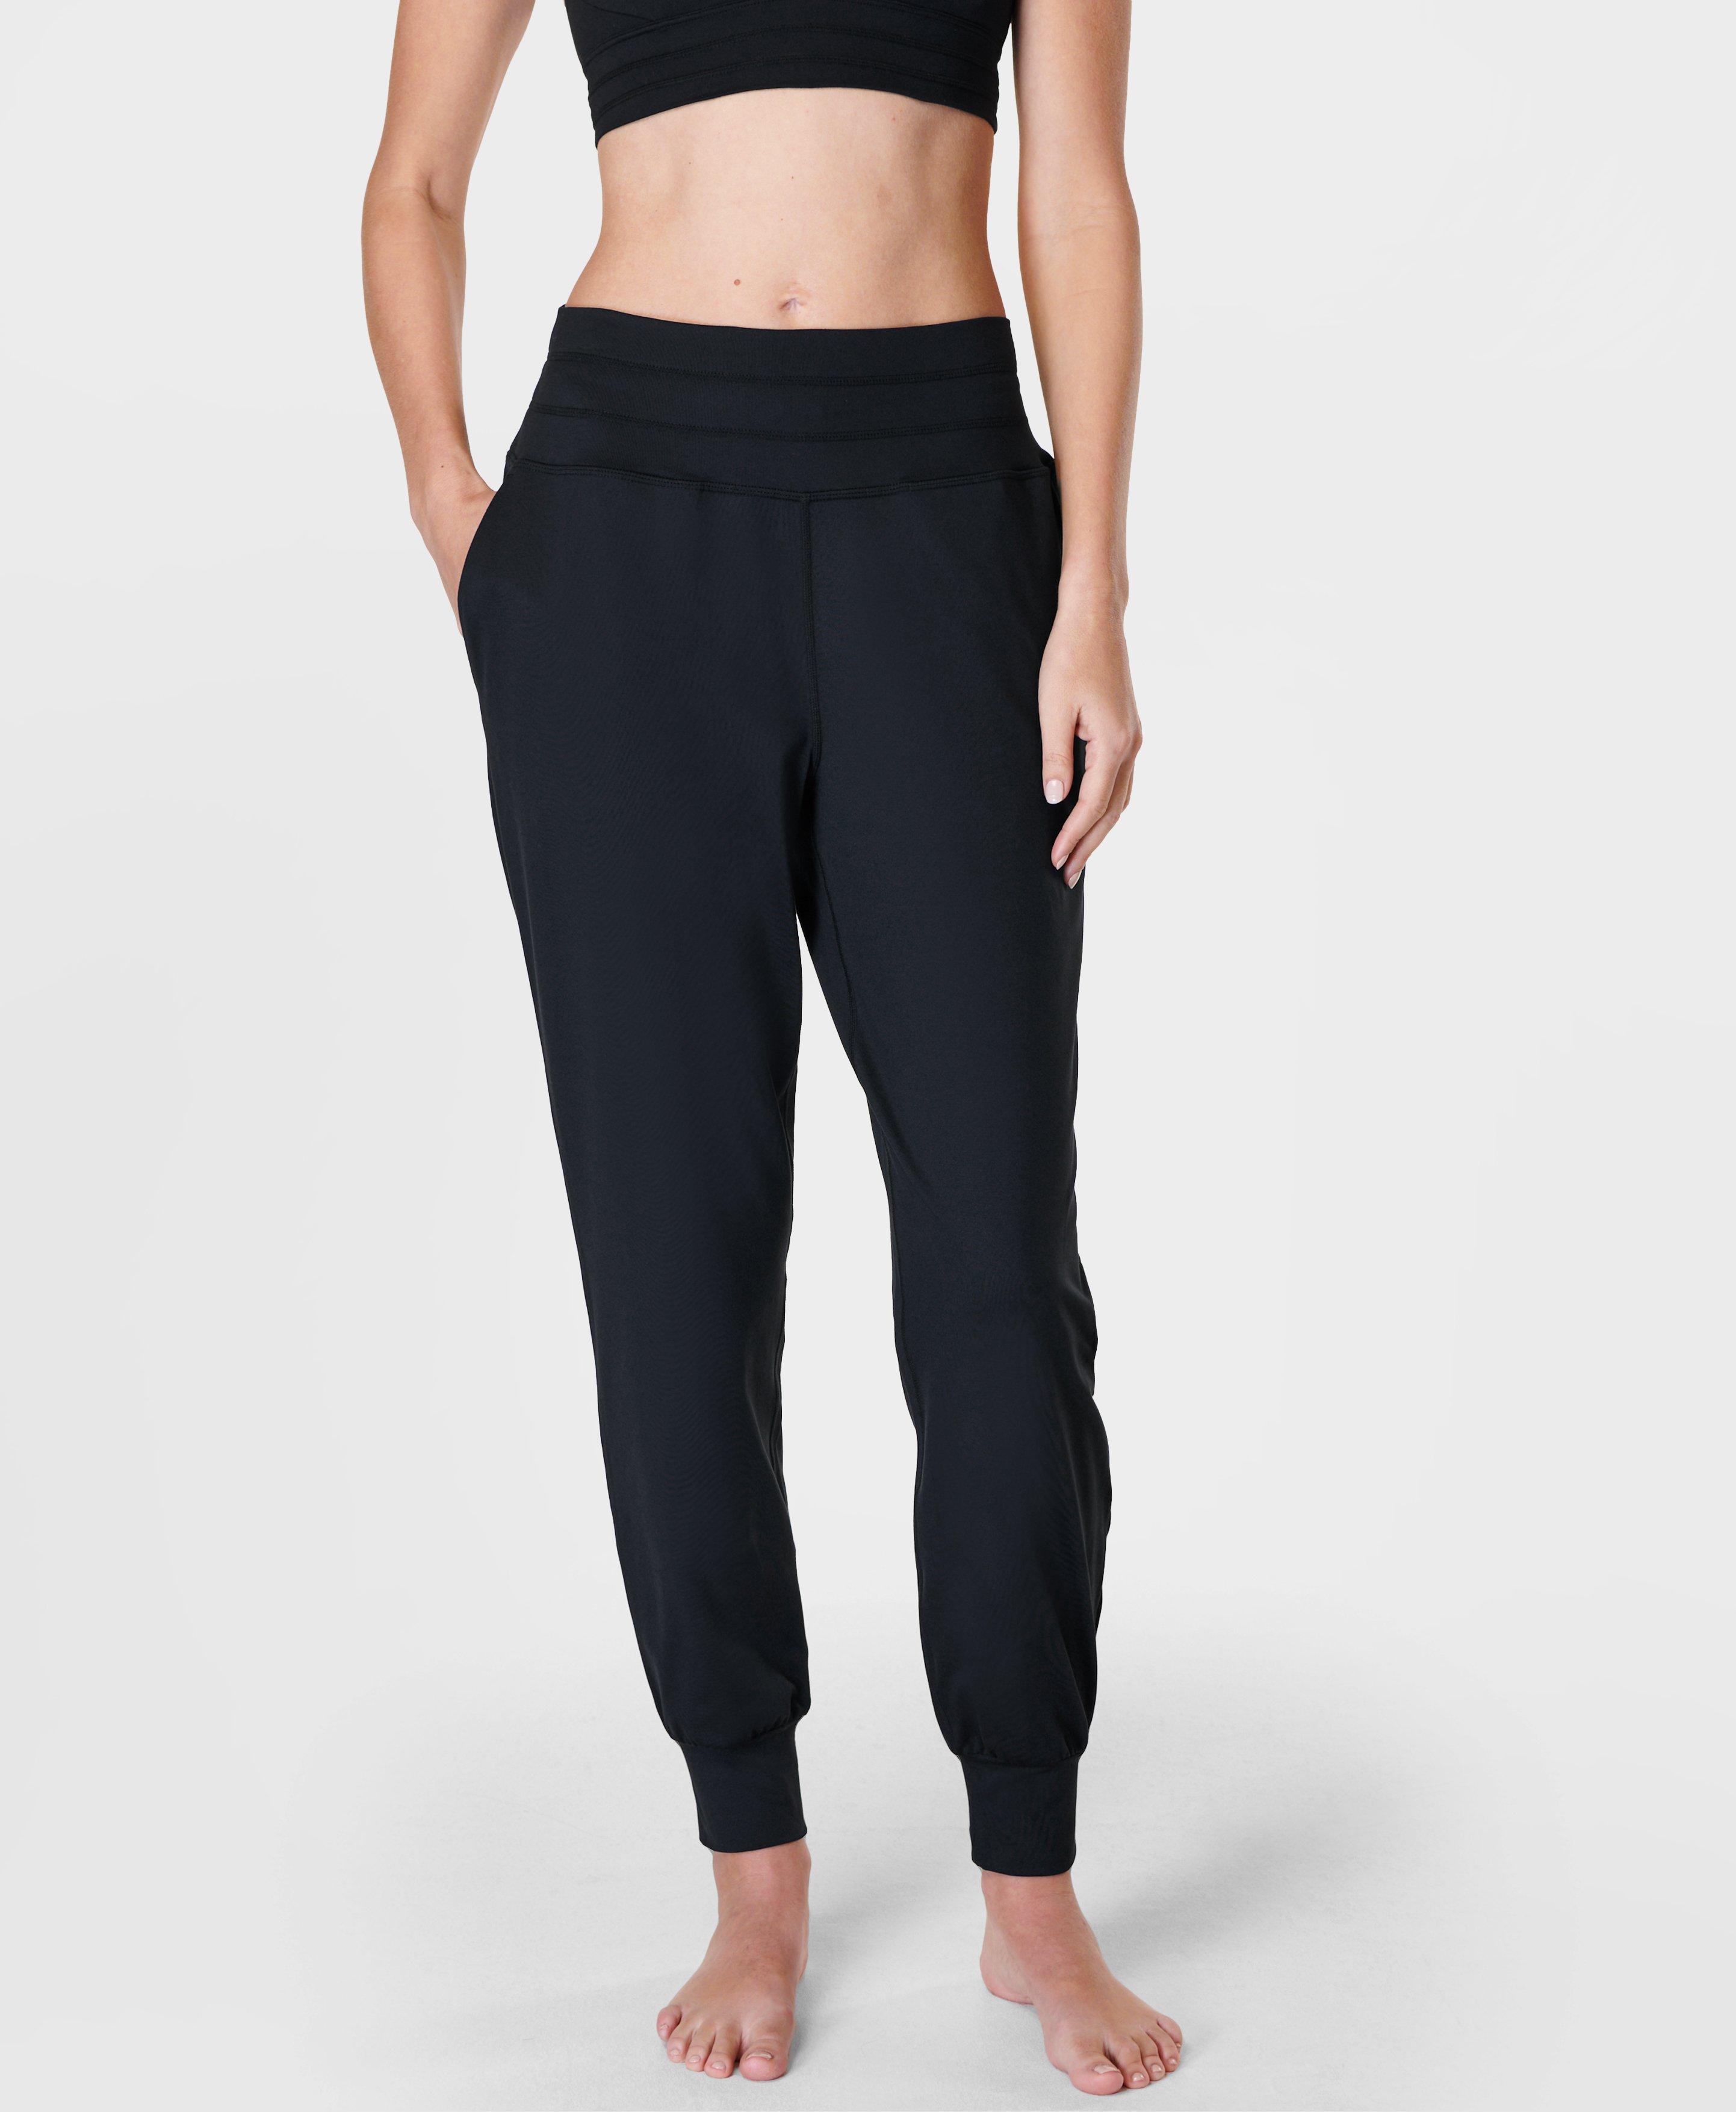 Gaia Yoga Pants - Black, Women's Pants